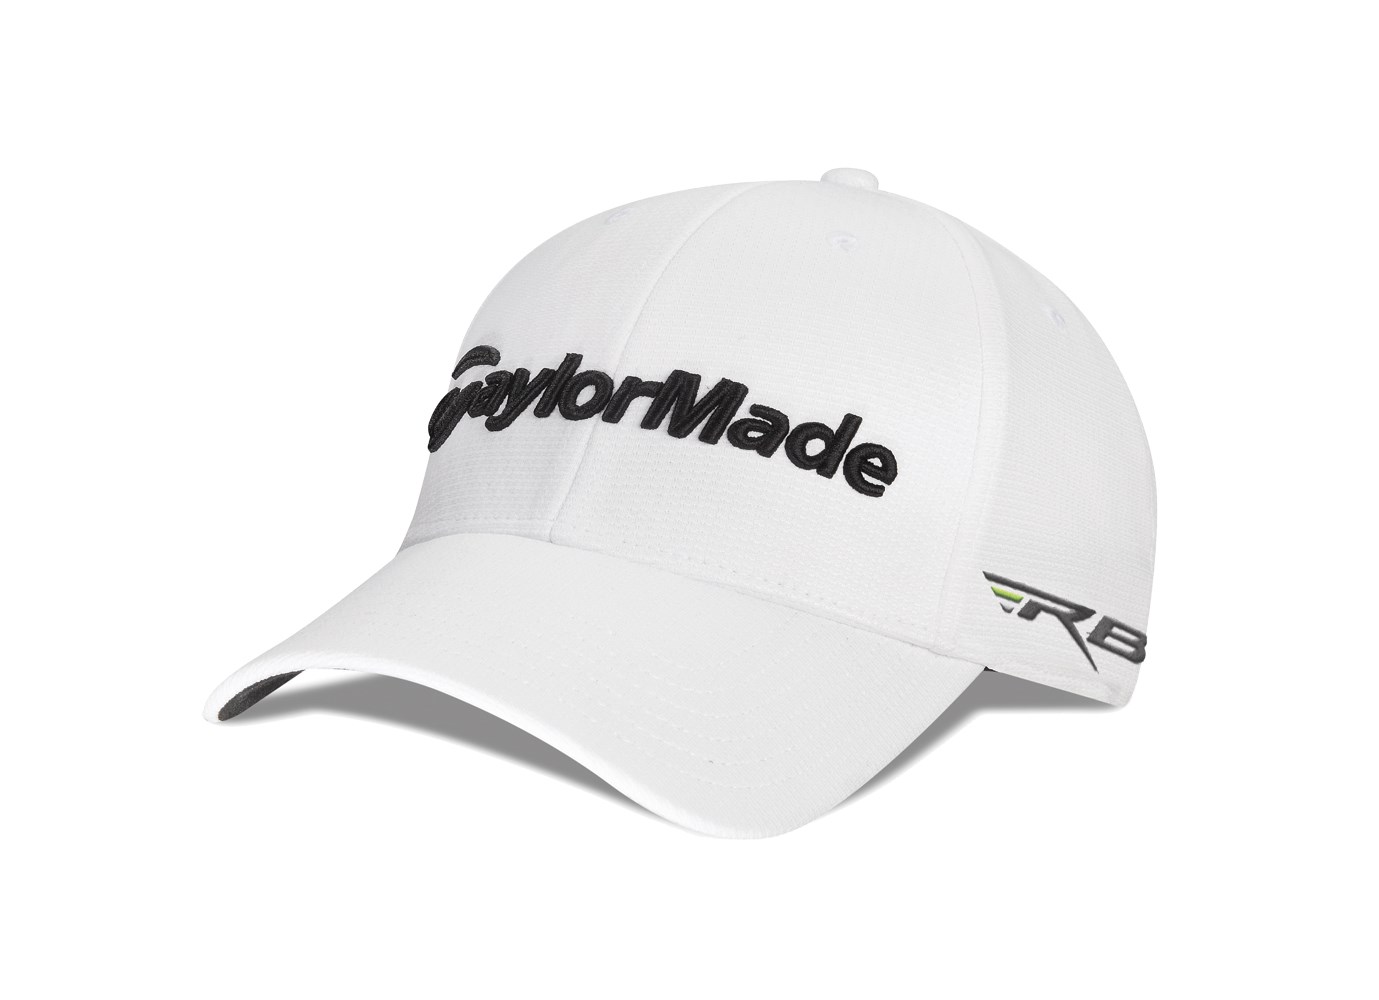 TaylorMade Tour Radar Structured Cap (RBZ & R11s logo) - Golfonline